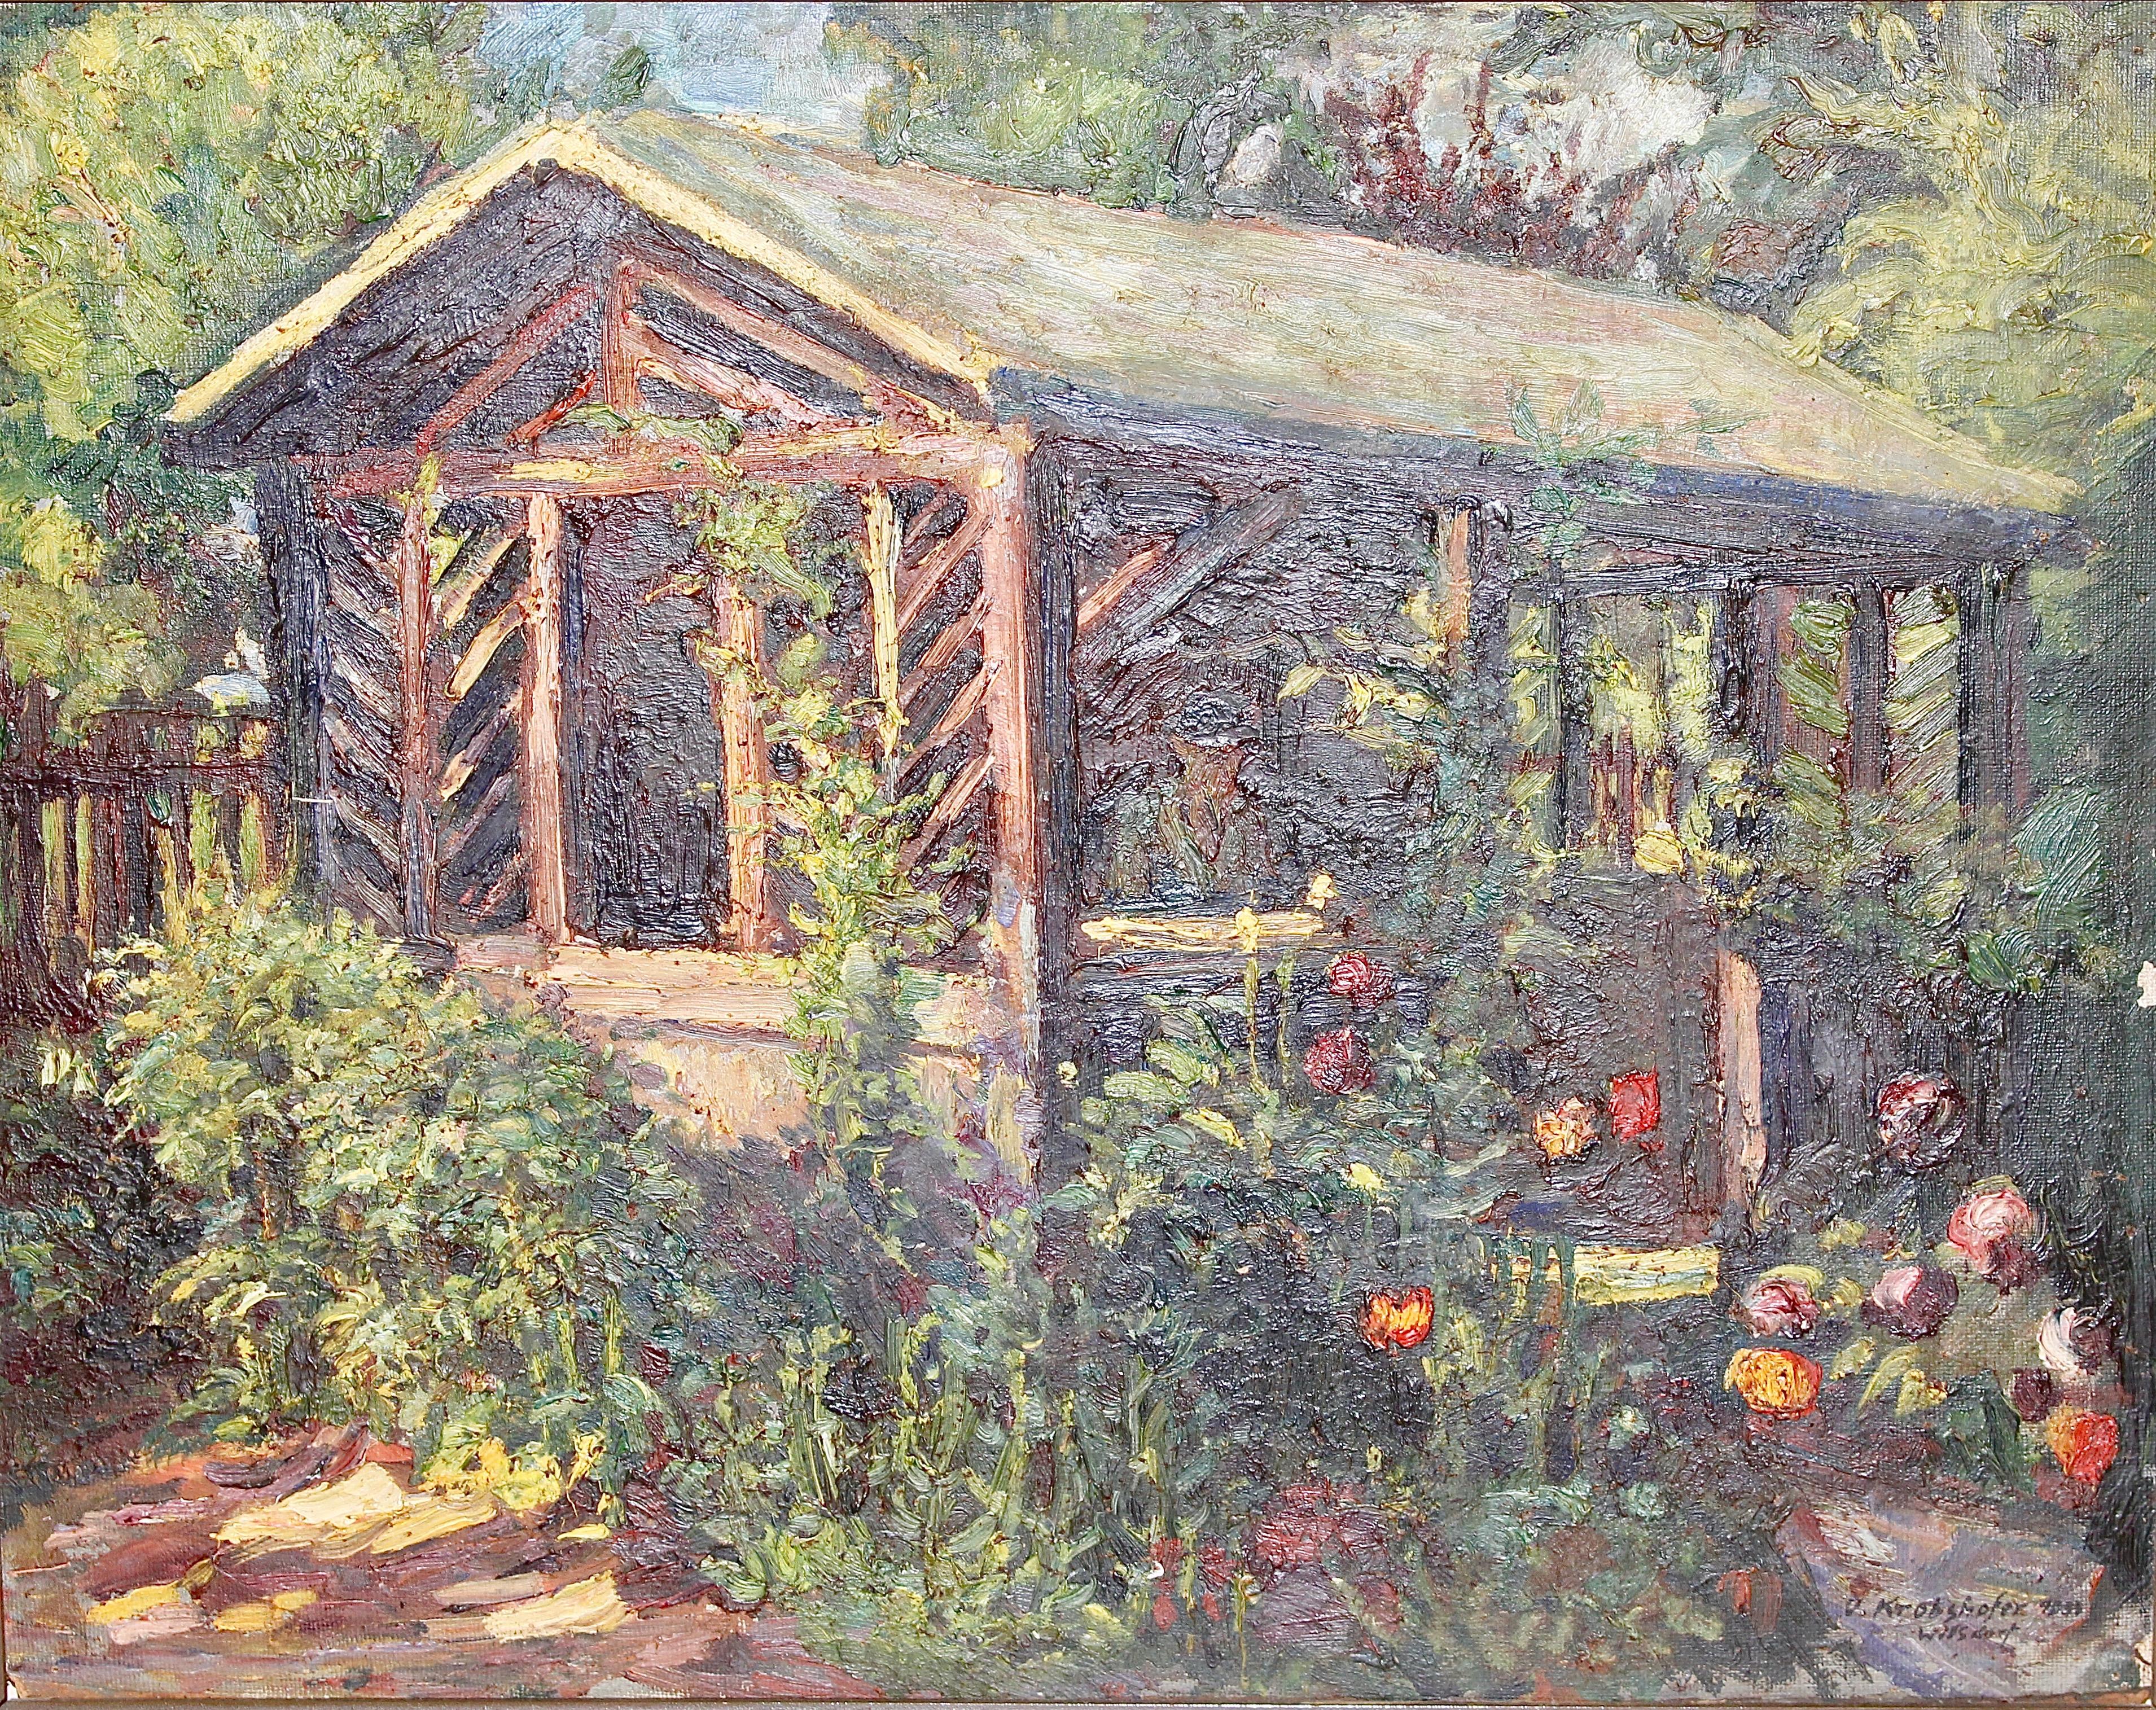 OSWALD VON KROBSHOFER Landscape Painting - Antique Oil Painting, Summer Garden with Flowers.